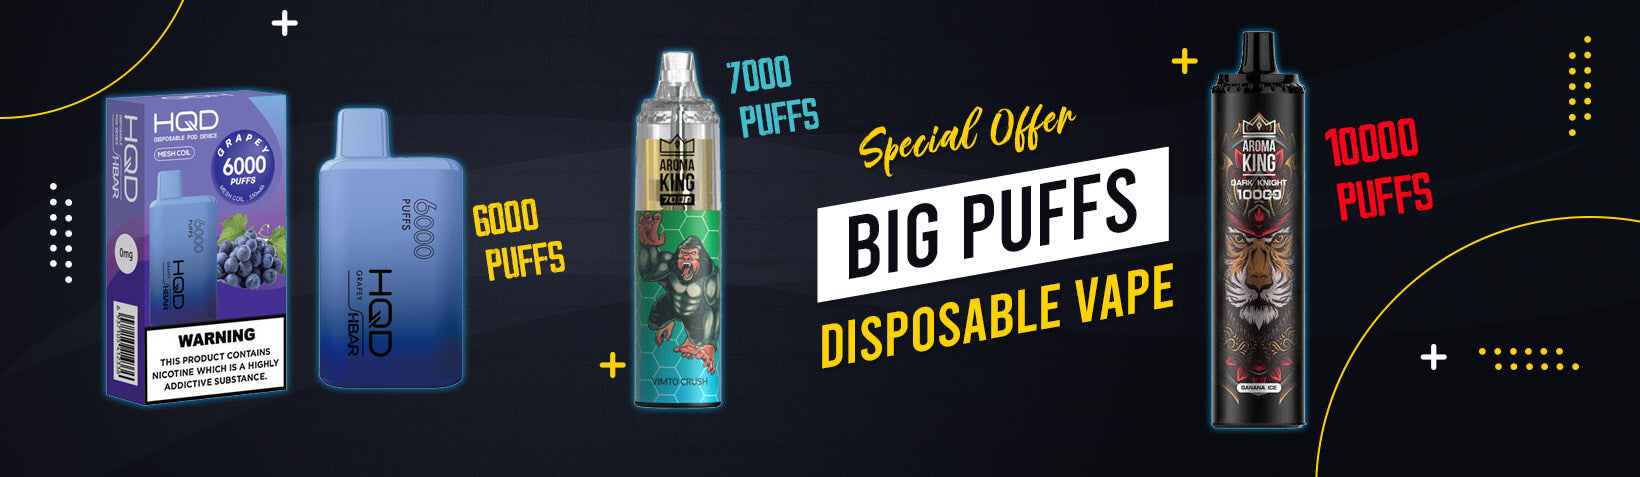 Big Puffs Disposable Vape